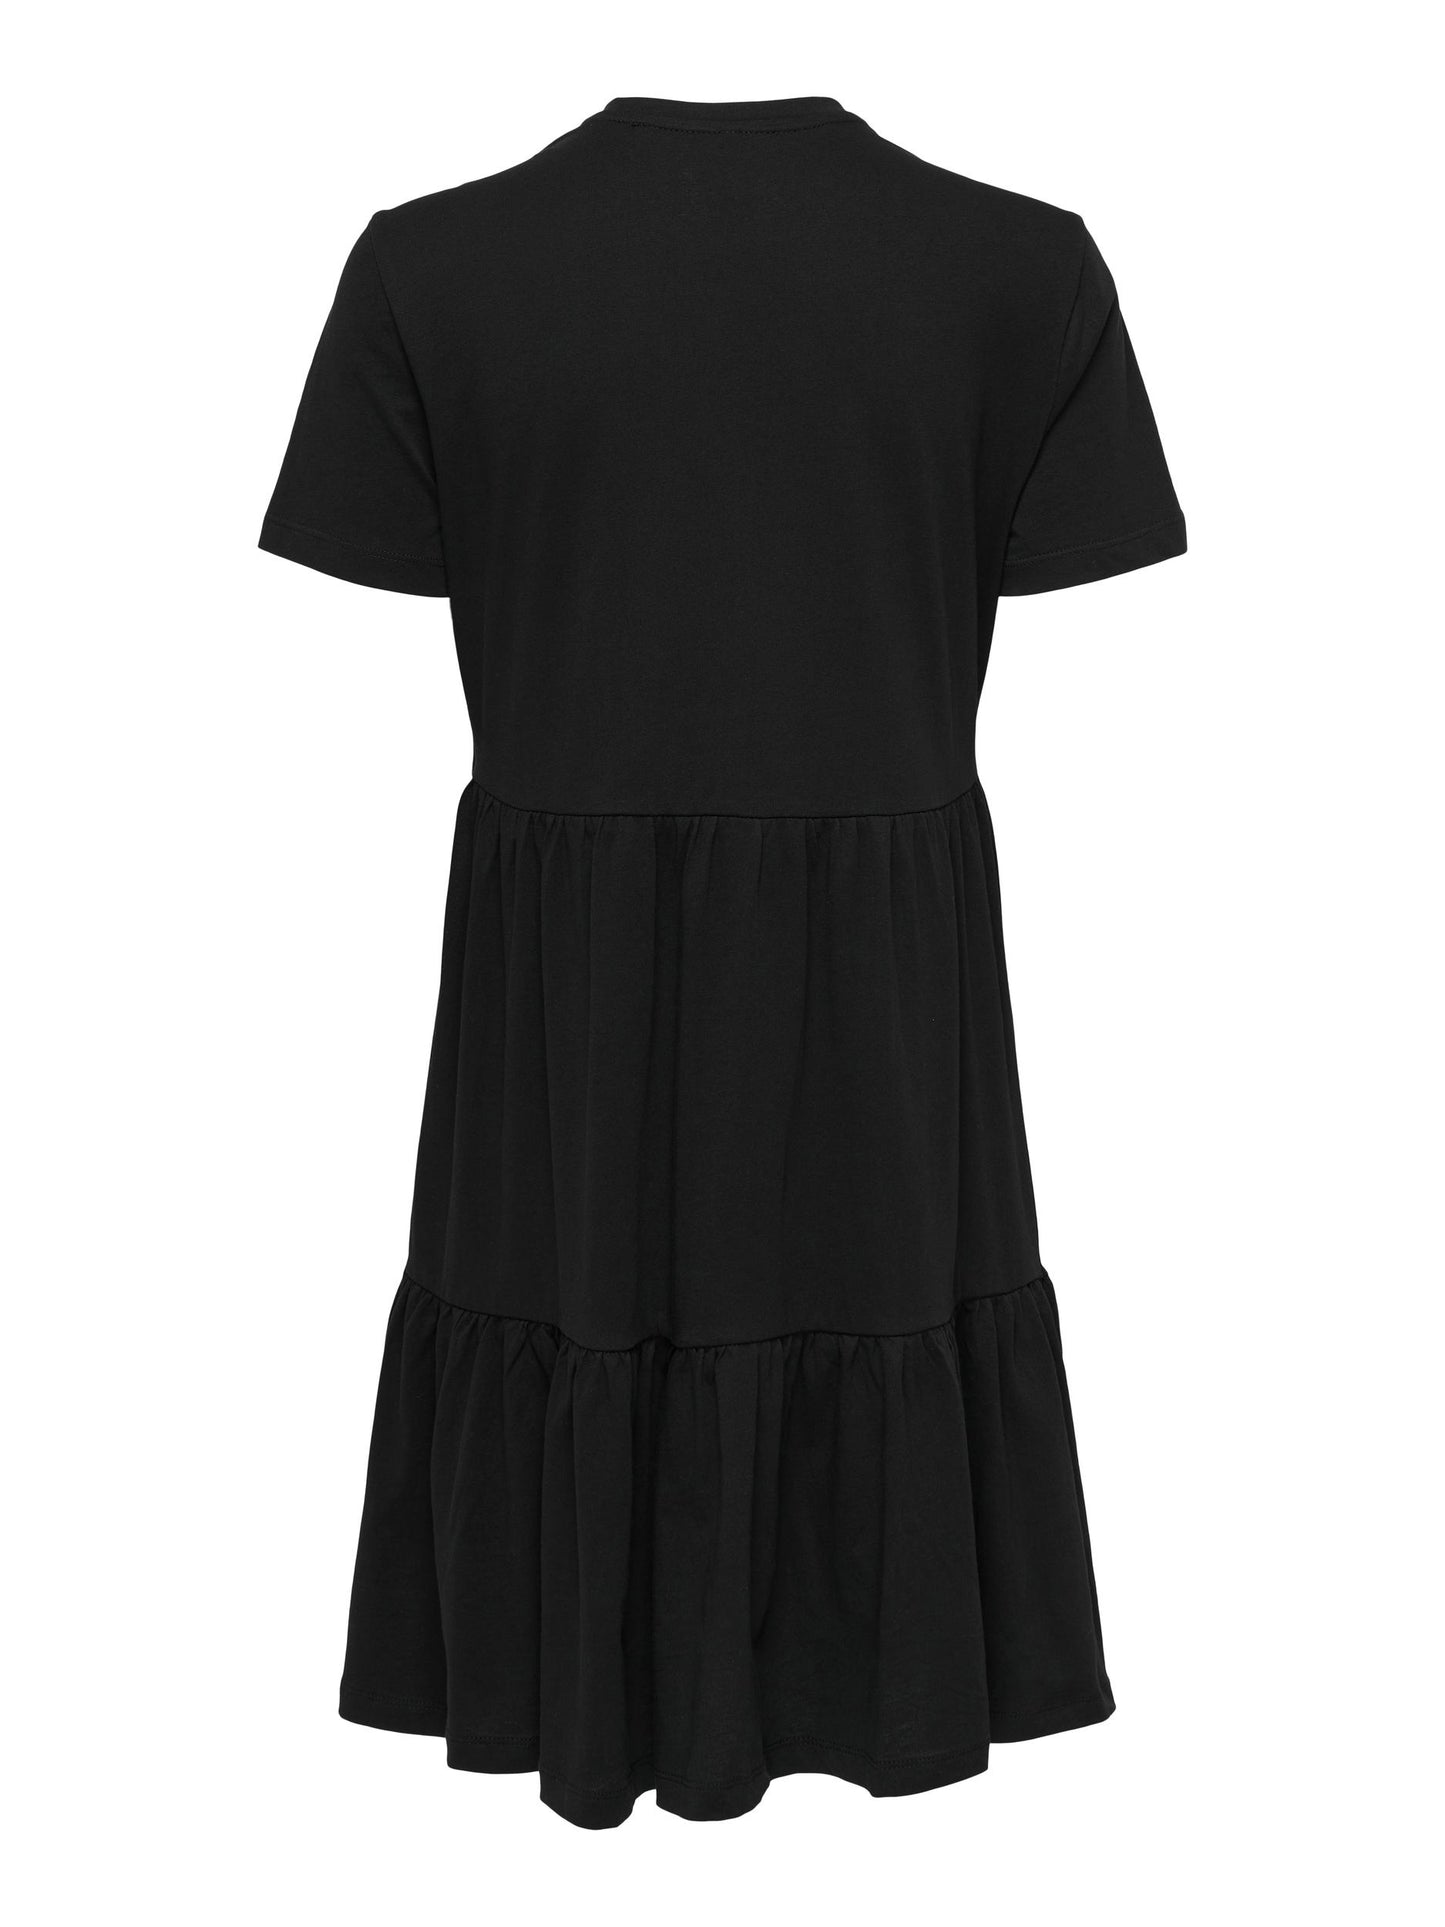 May Life Peplum Dress - Black